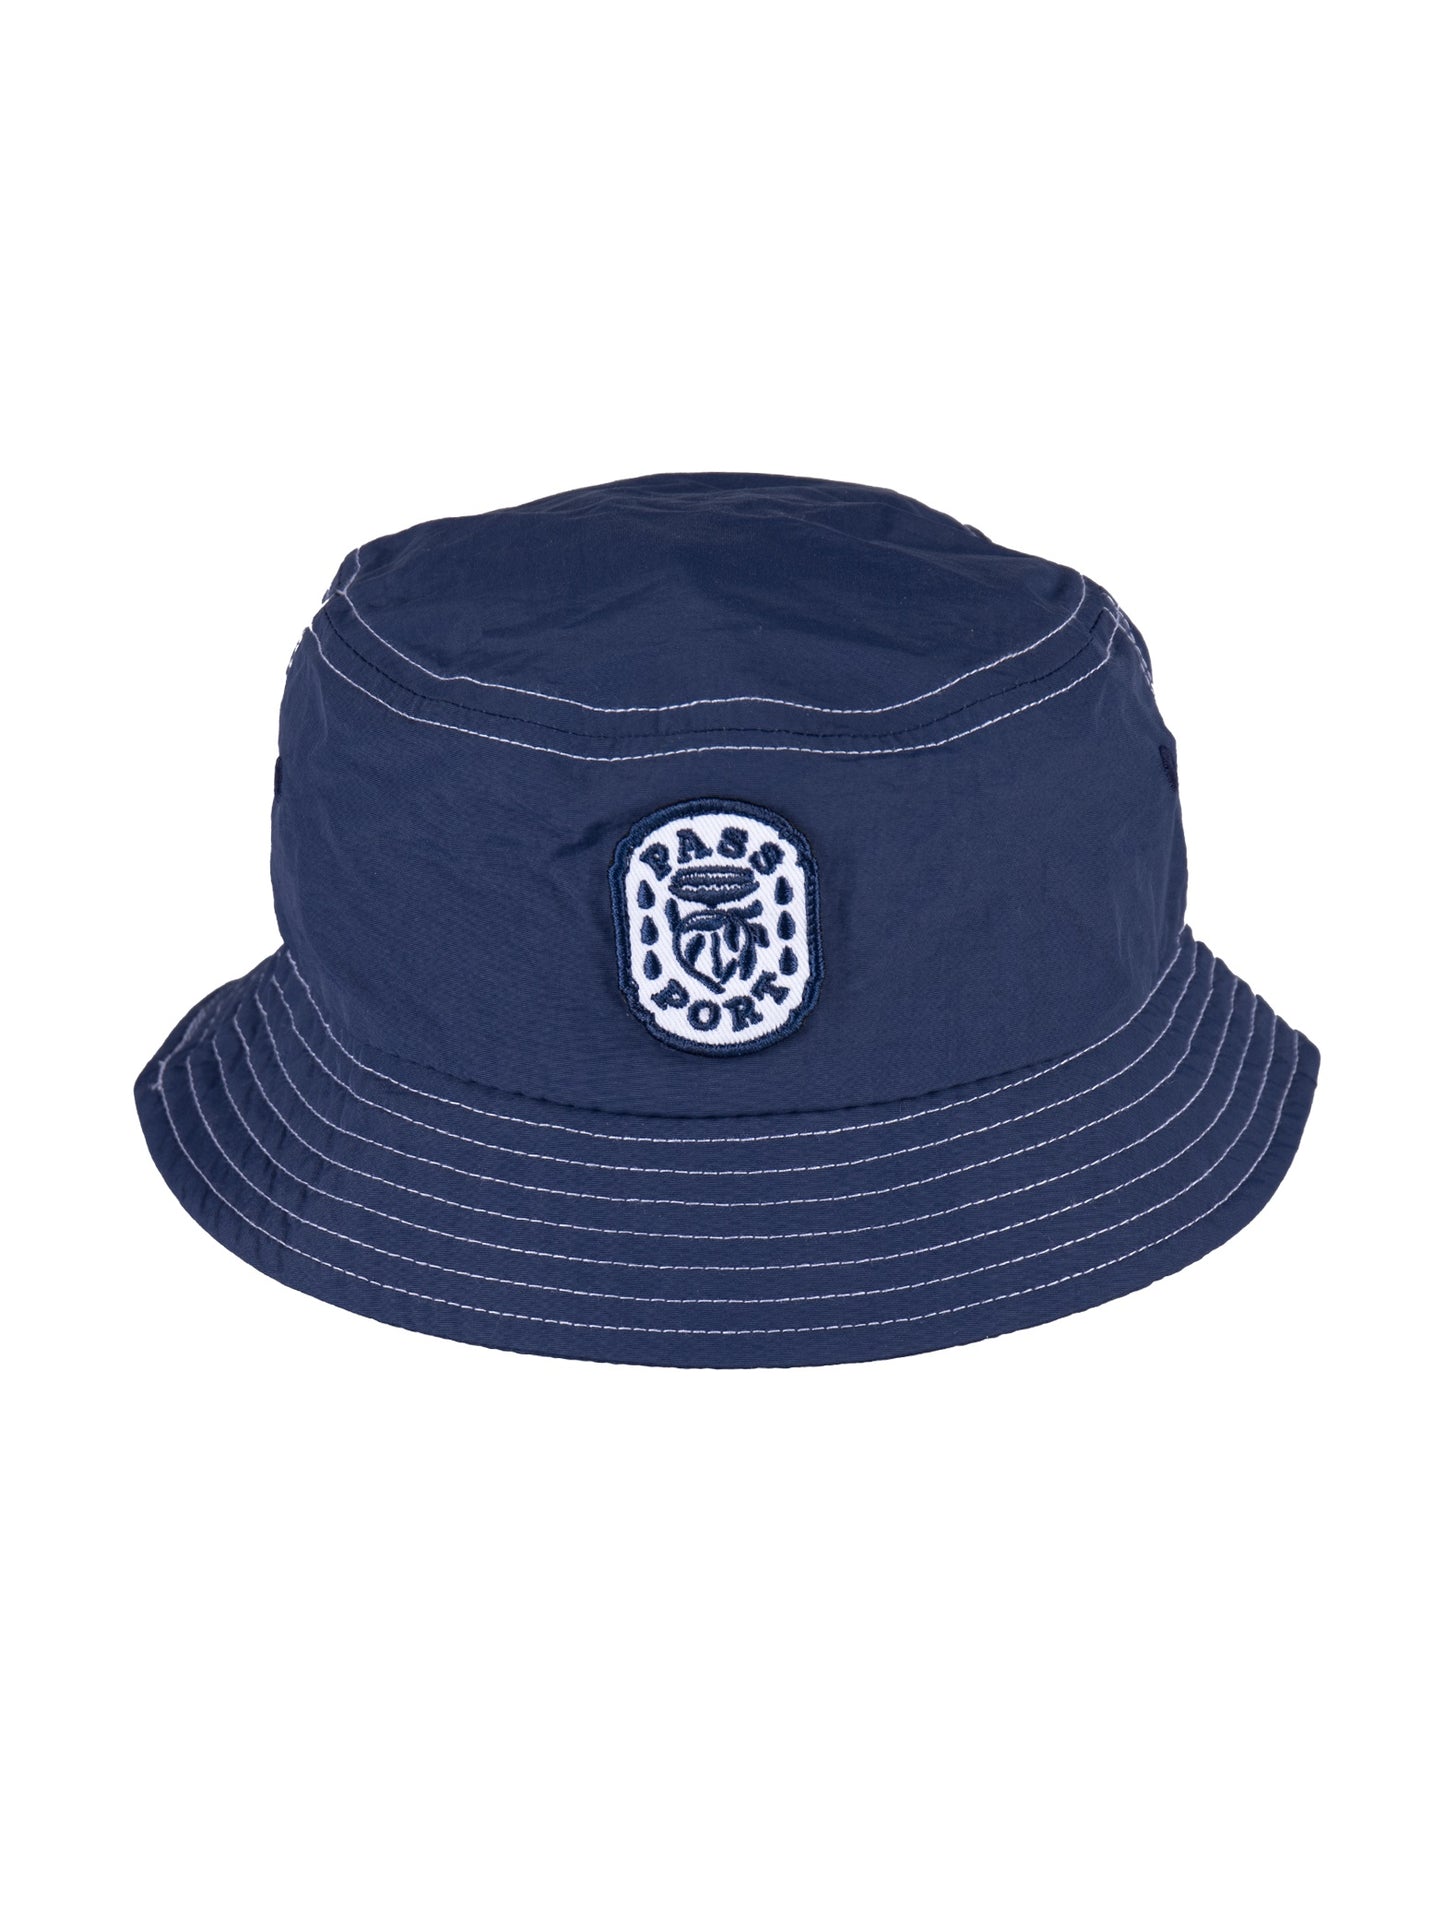 Passport Foundation RPET Bucket Hat - Navy